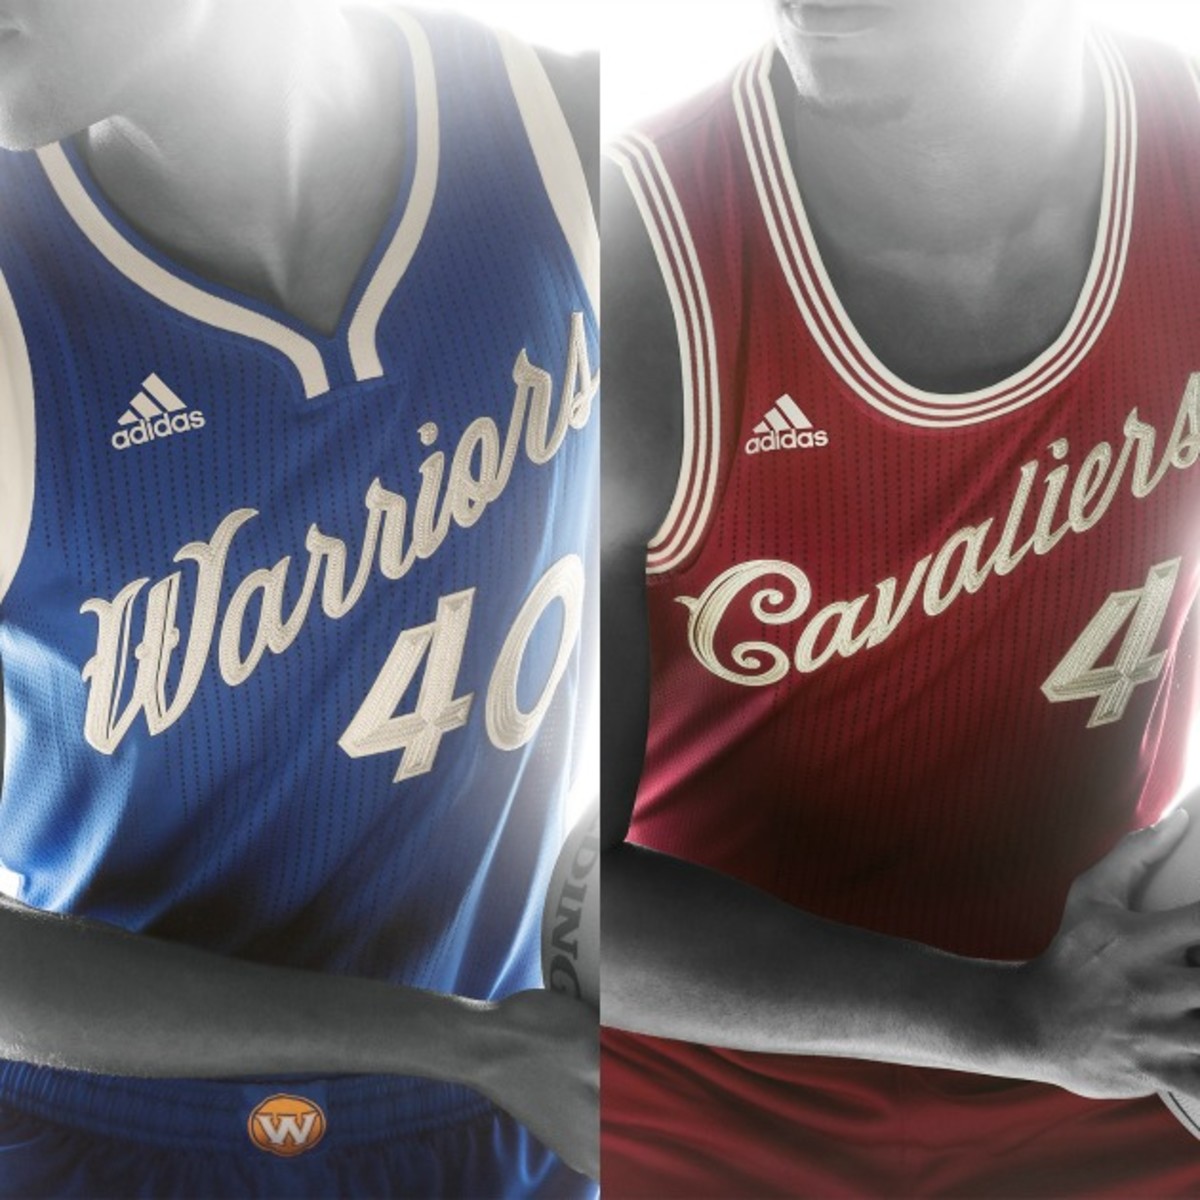 New NBA Christmas jerseys unveiled (Photo)